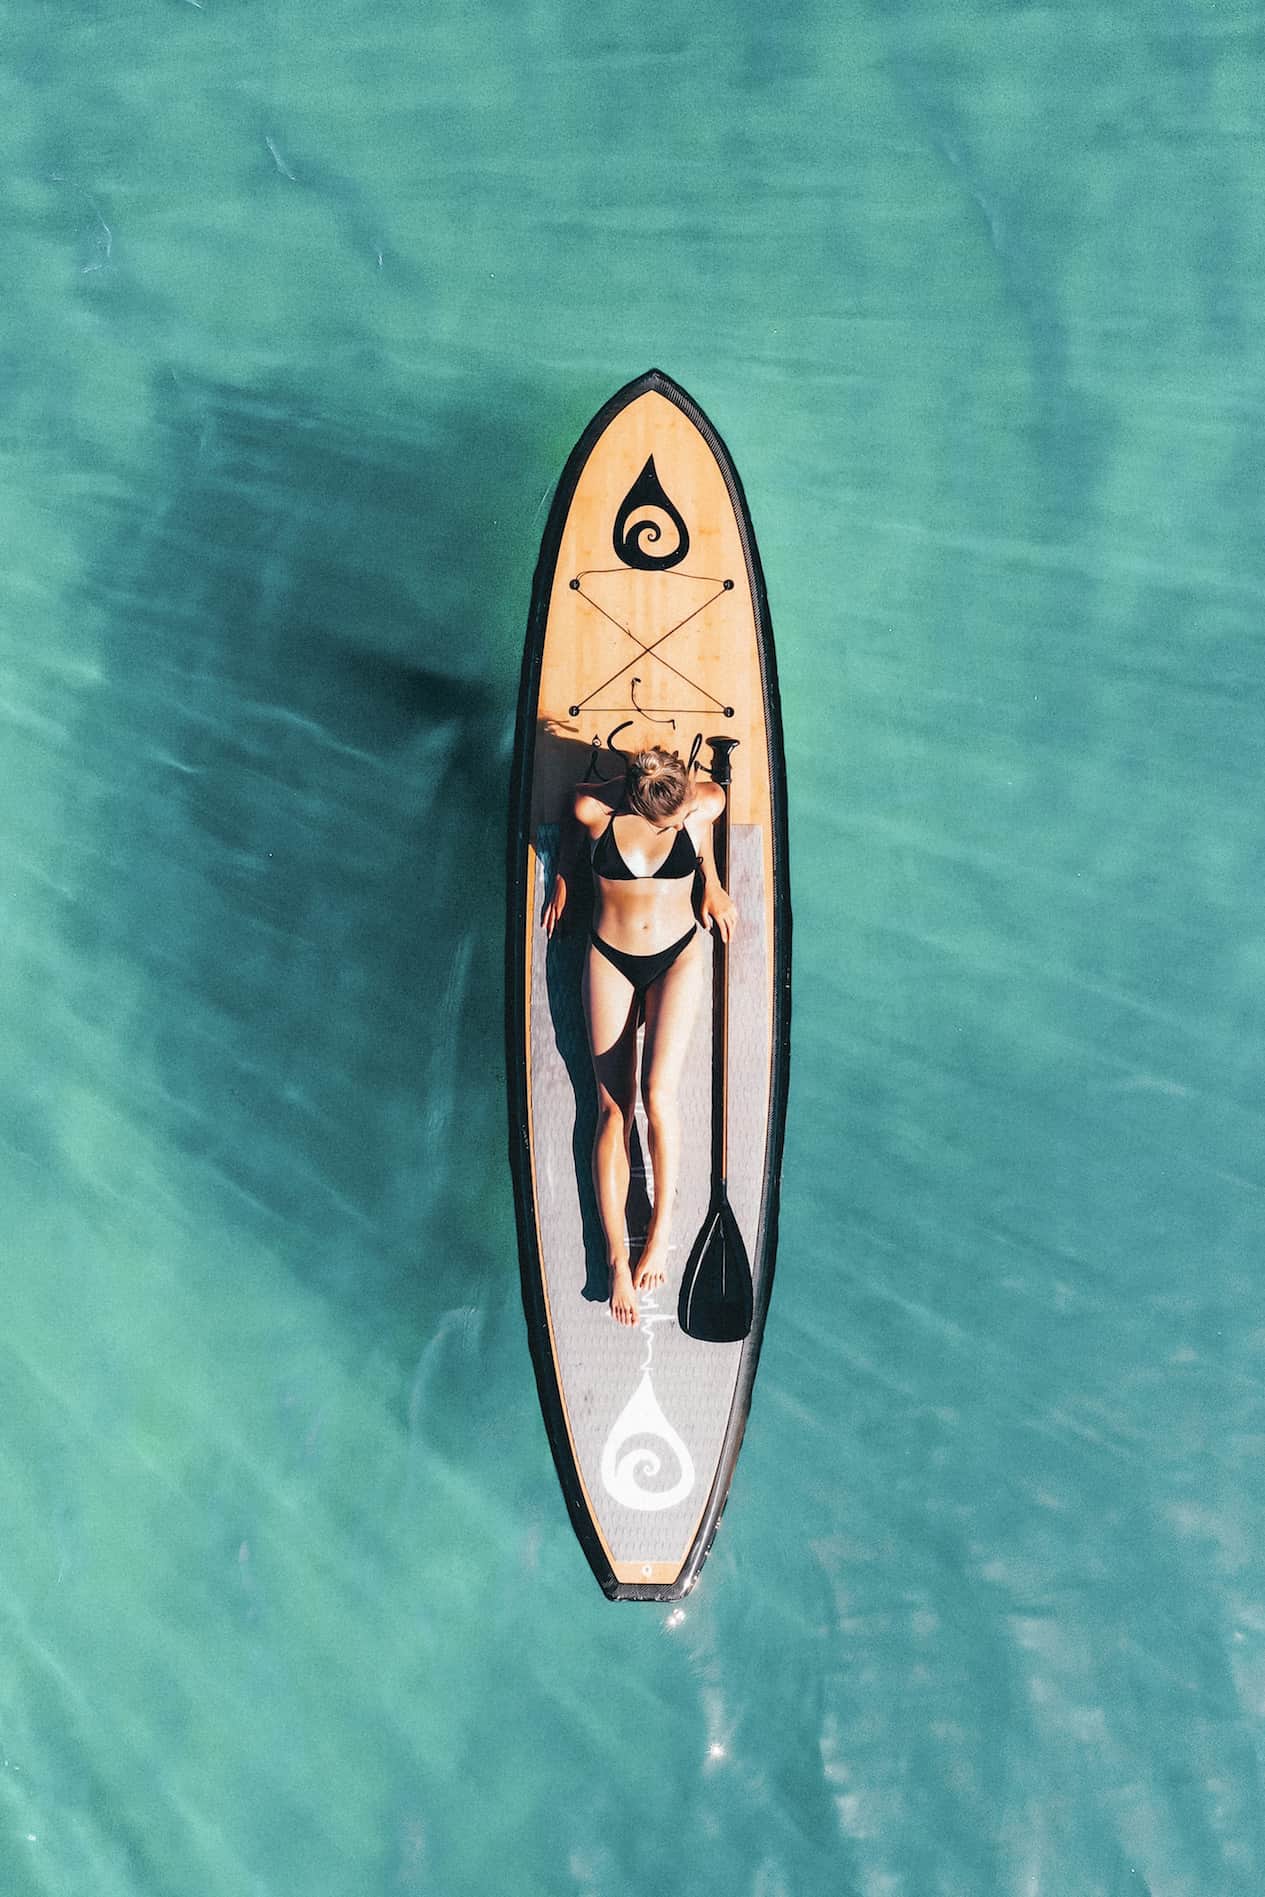 Woman wearing a black bikini on a paddle board